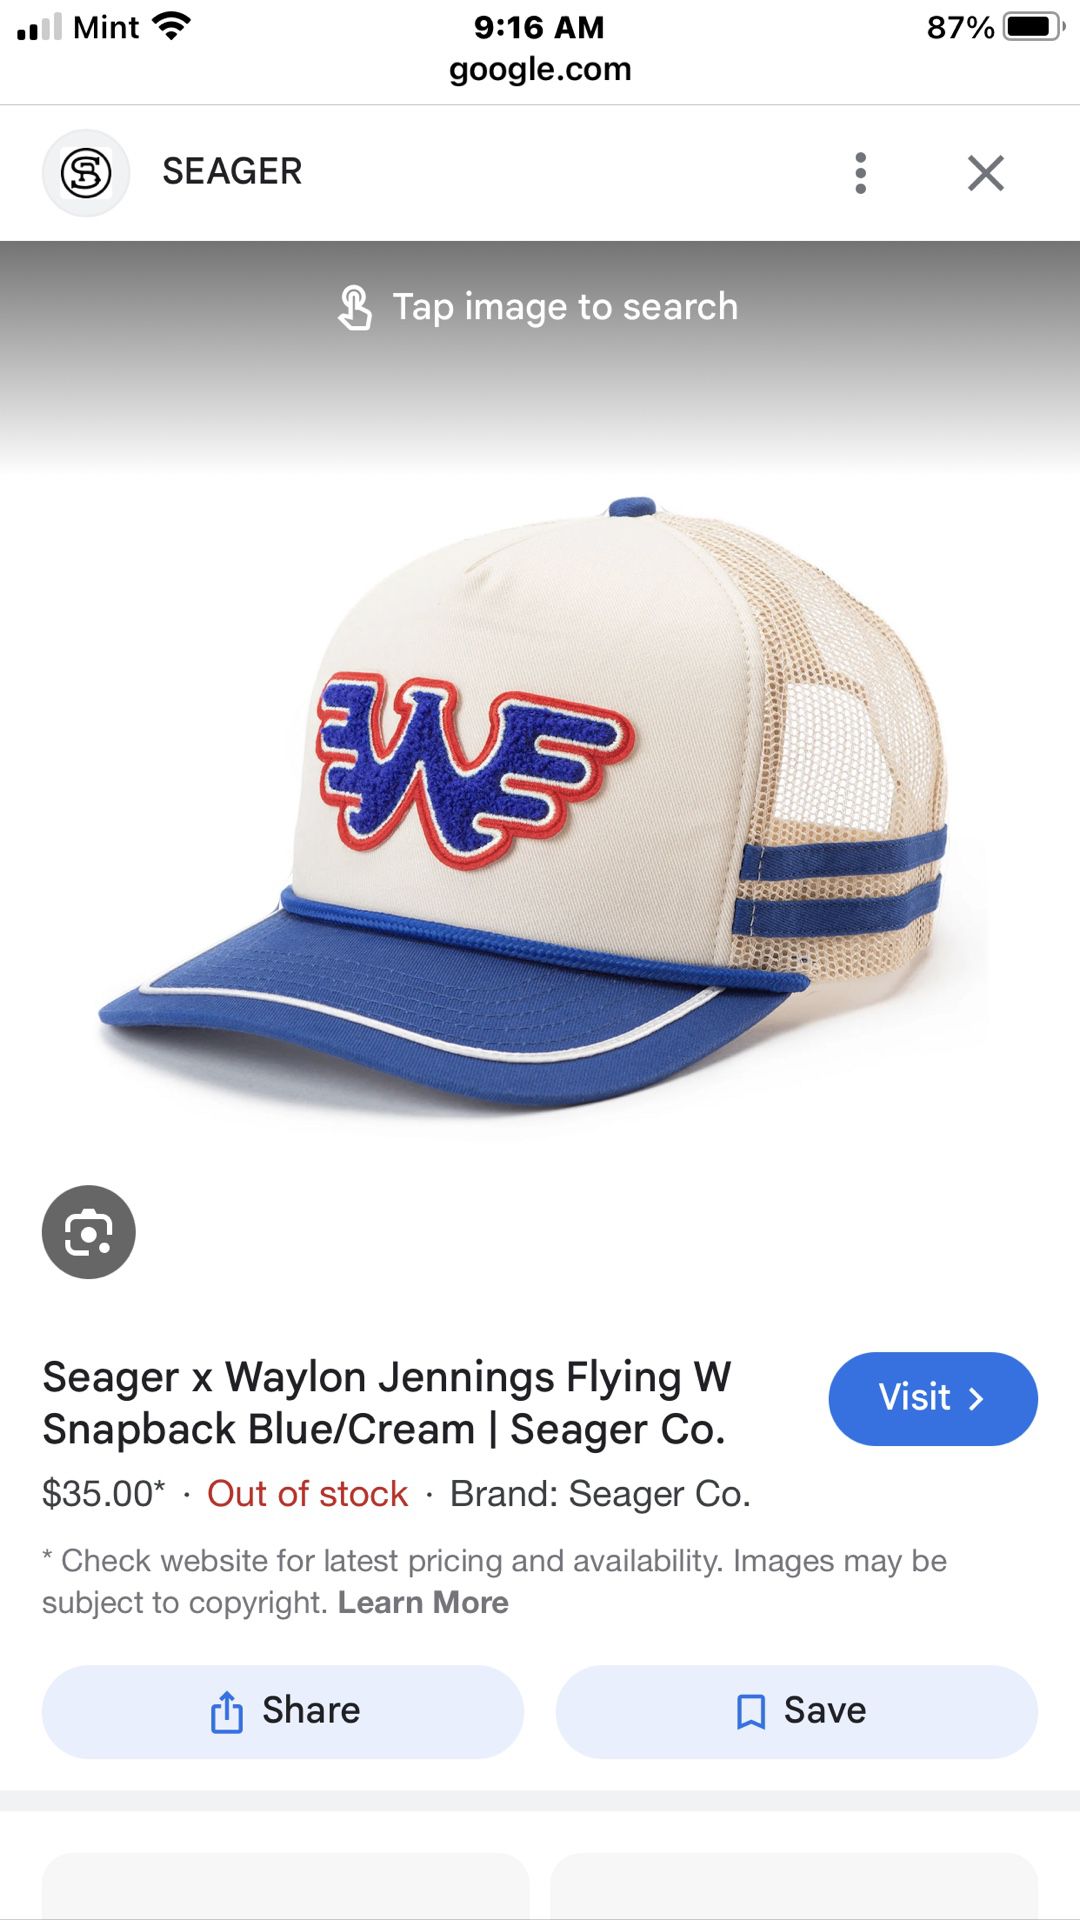 SEAGER X WAYLON JENNINGS FLYING W SNAPBACK BLUE/CREAM hAT